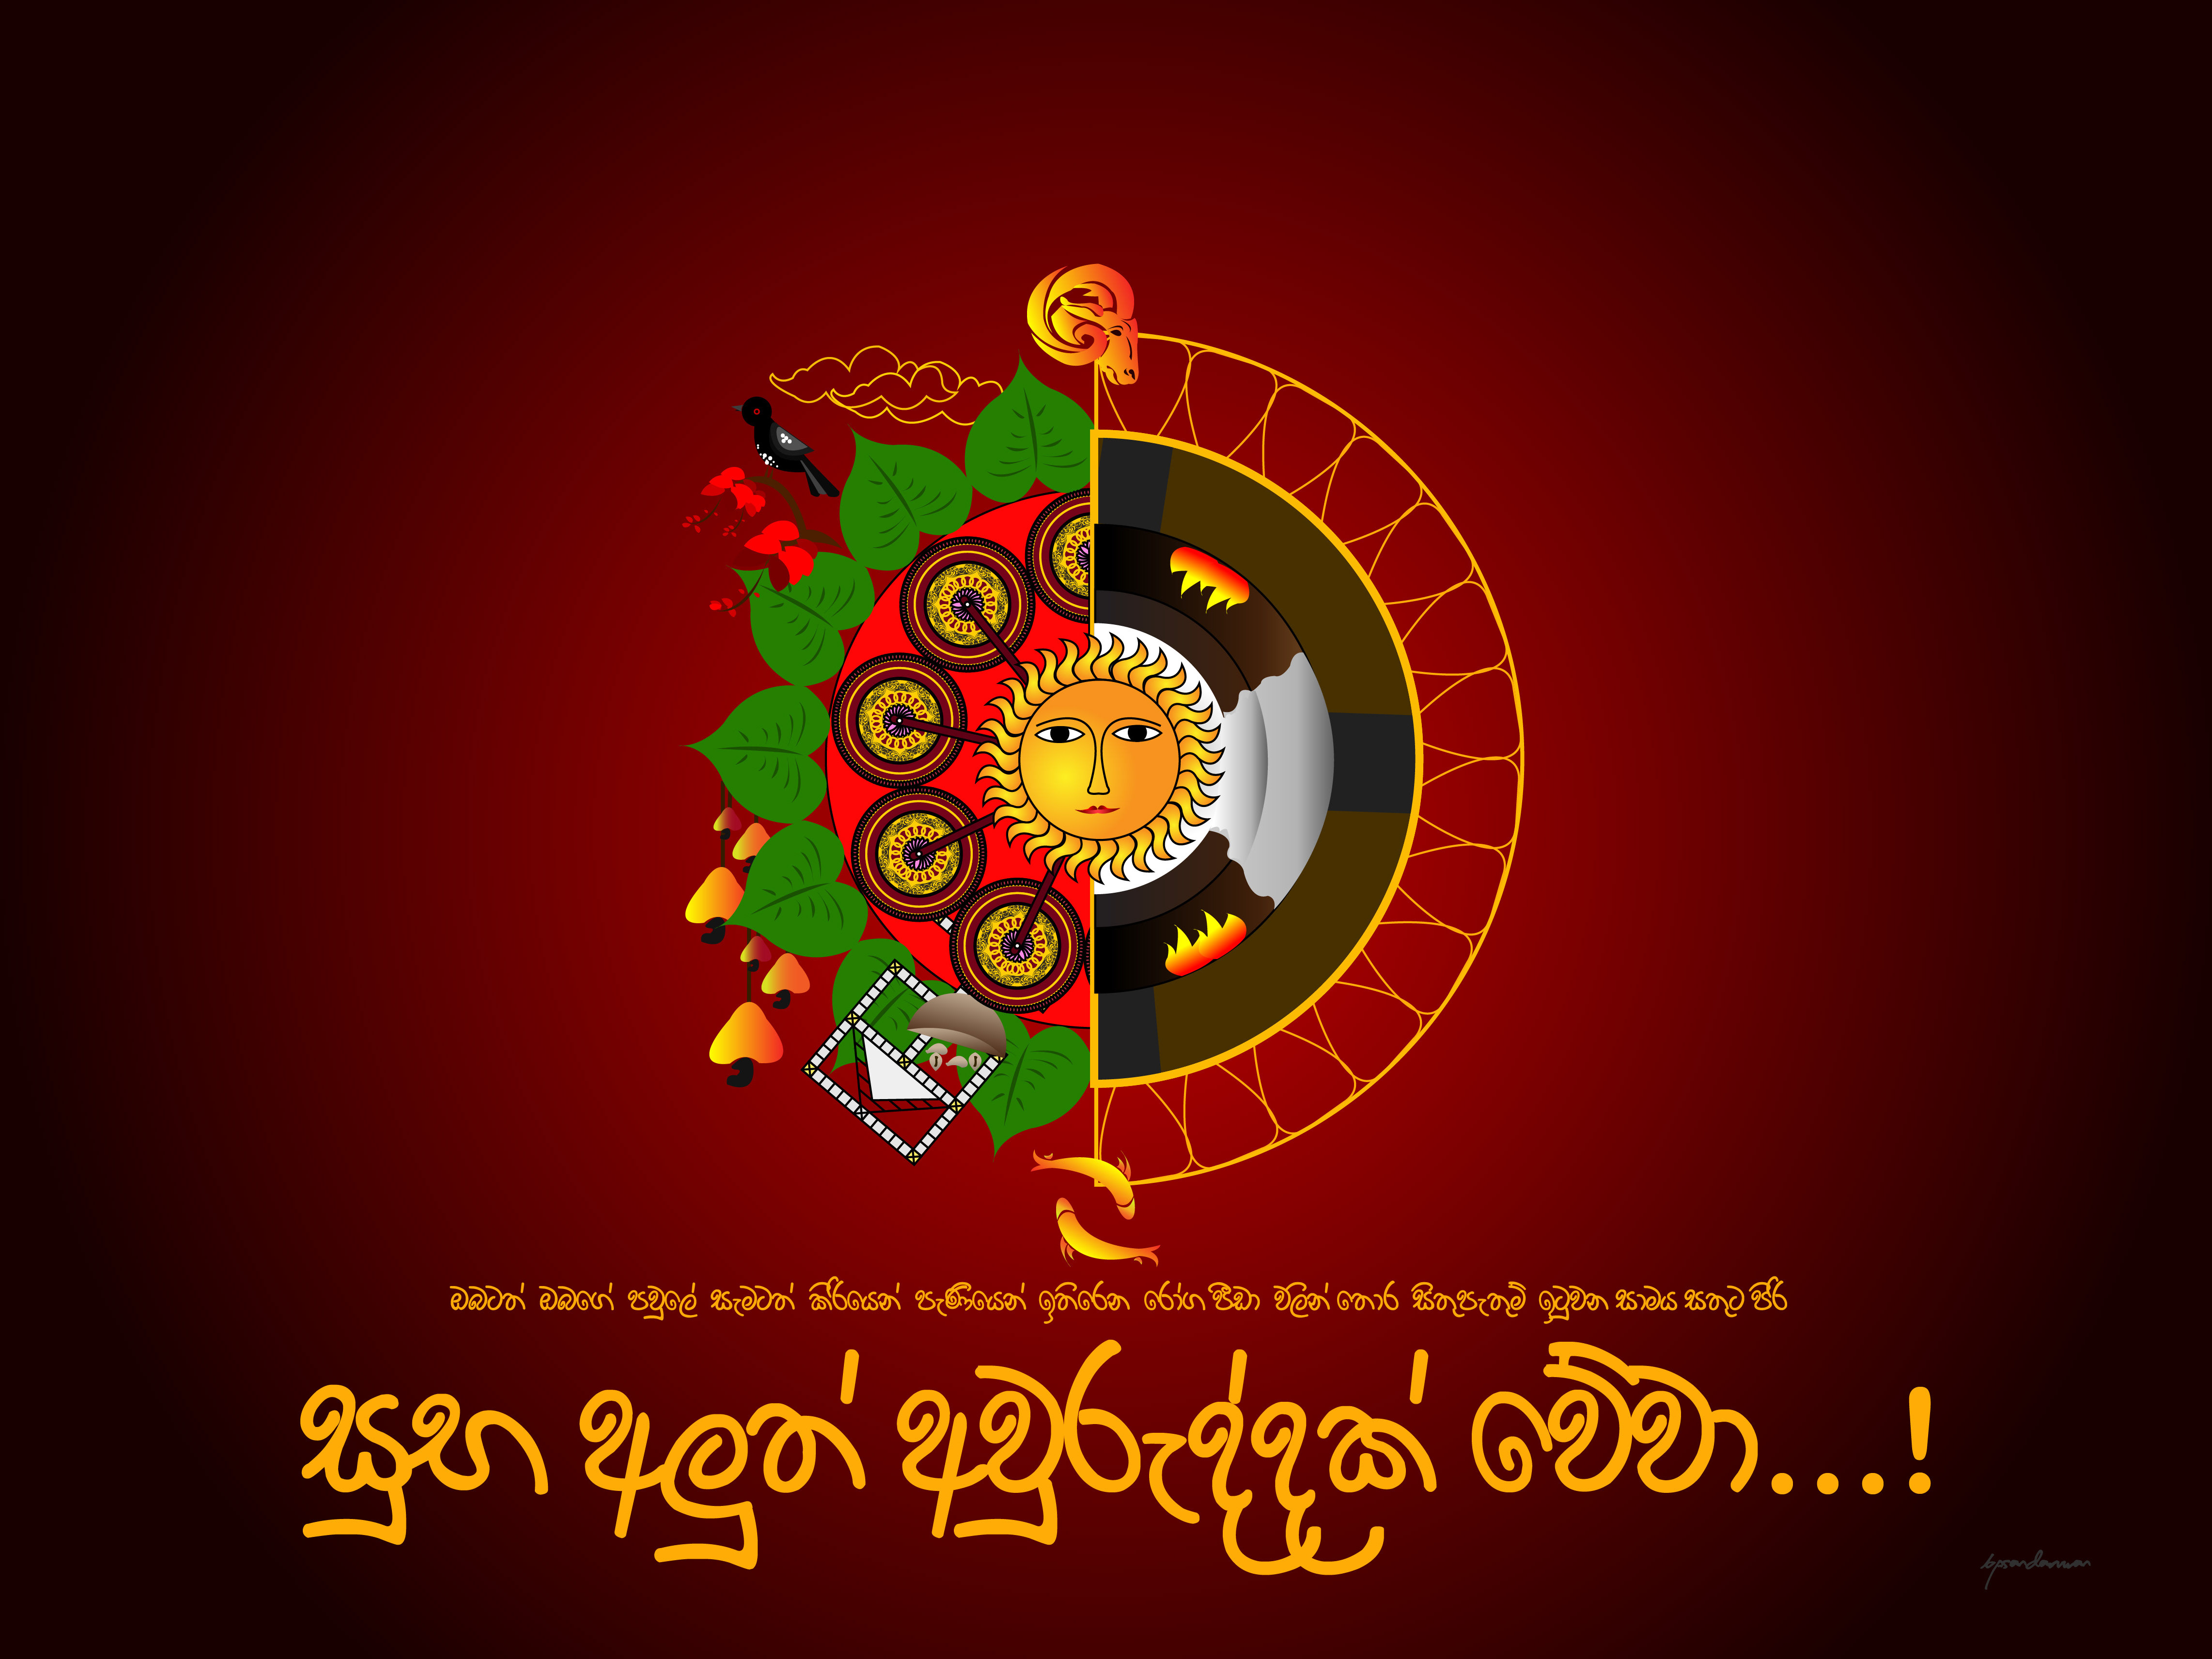 Pasindu Sandaruwan - Sinhala & Tamil New year 2020